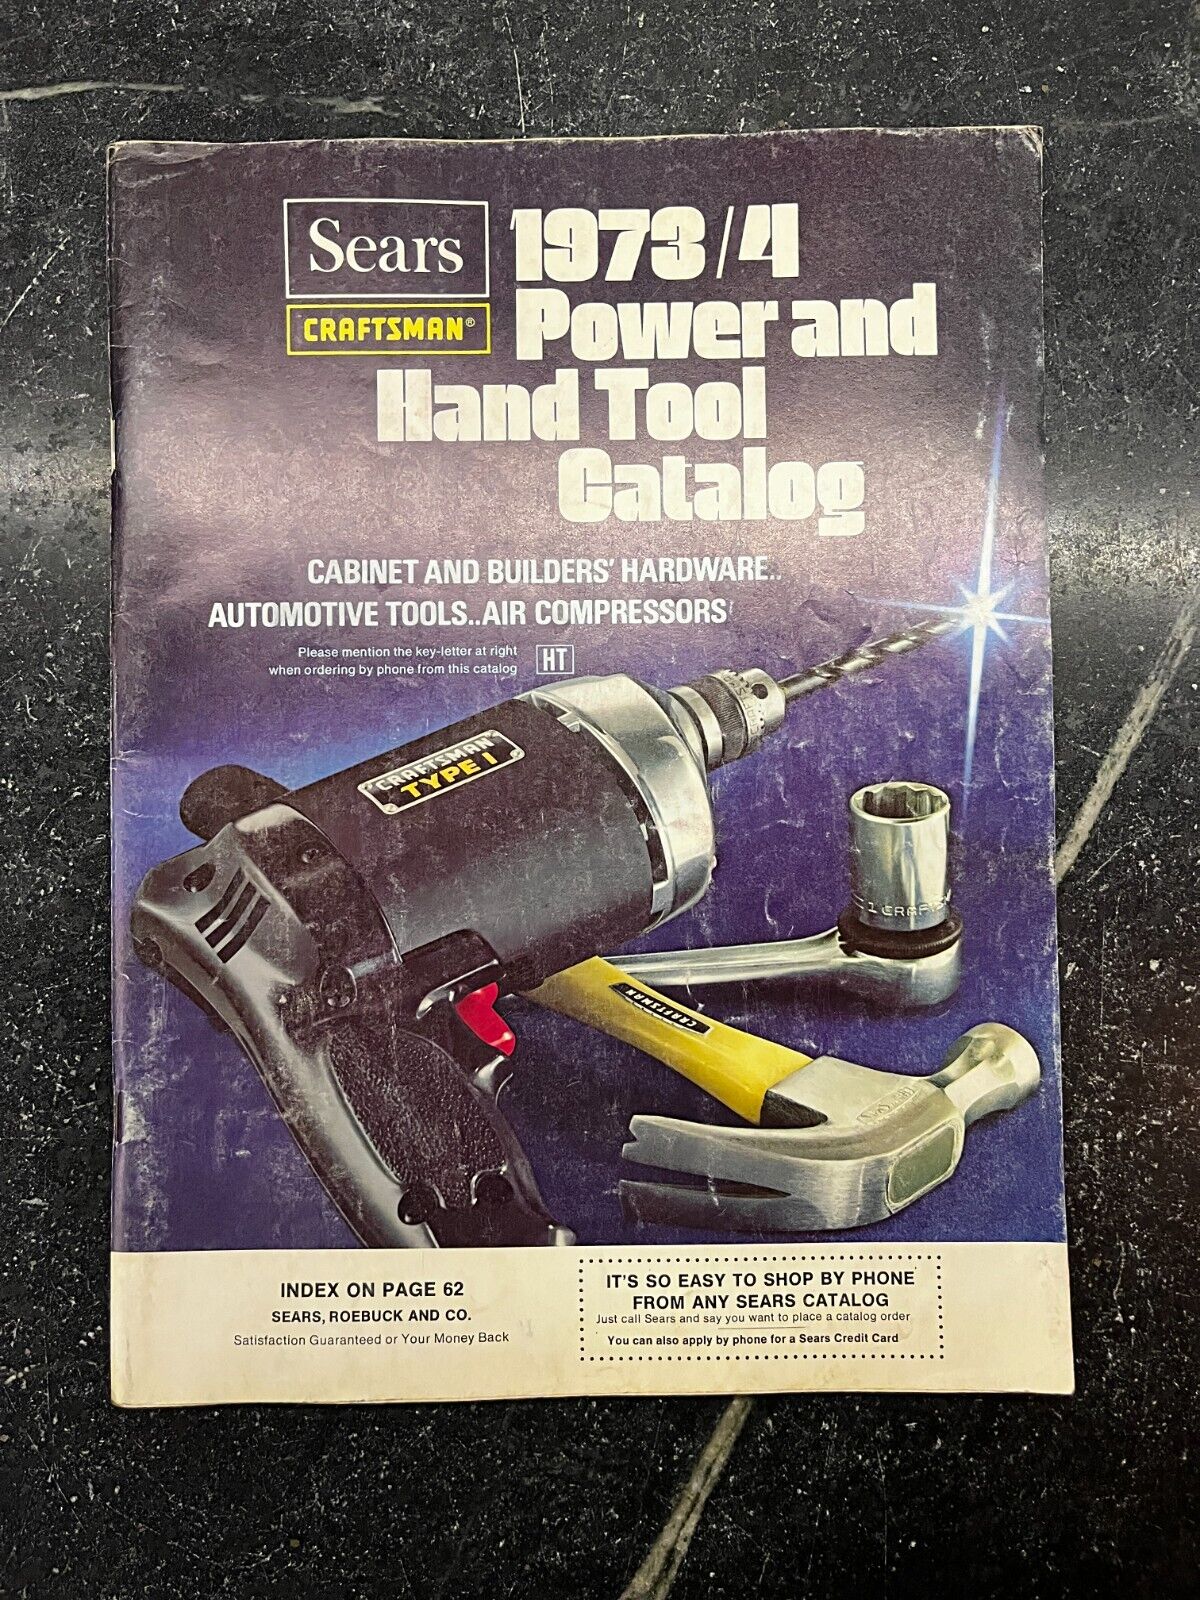 Vintage Sears Craftsman Power and Hand Tool Catalog 1973 / 1974 - ORIGINAL